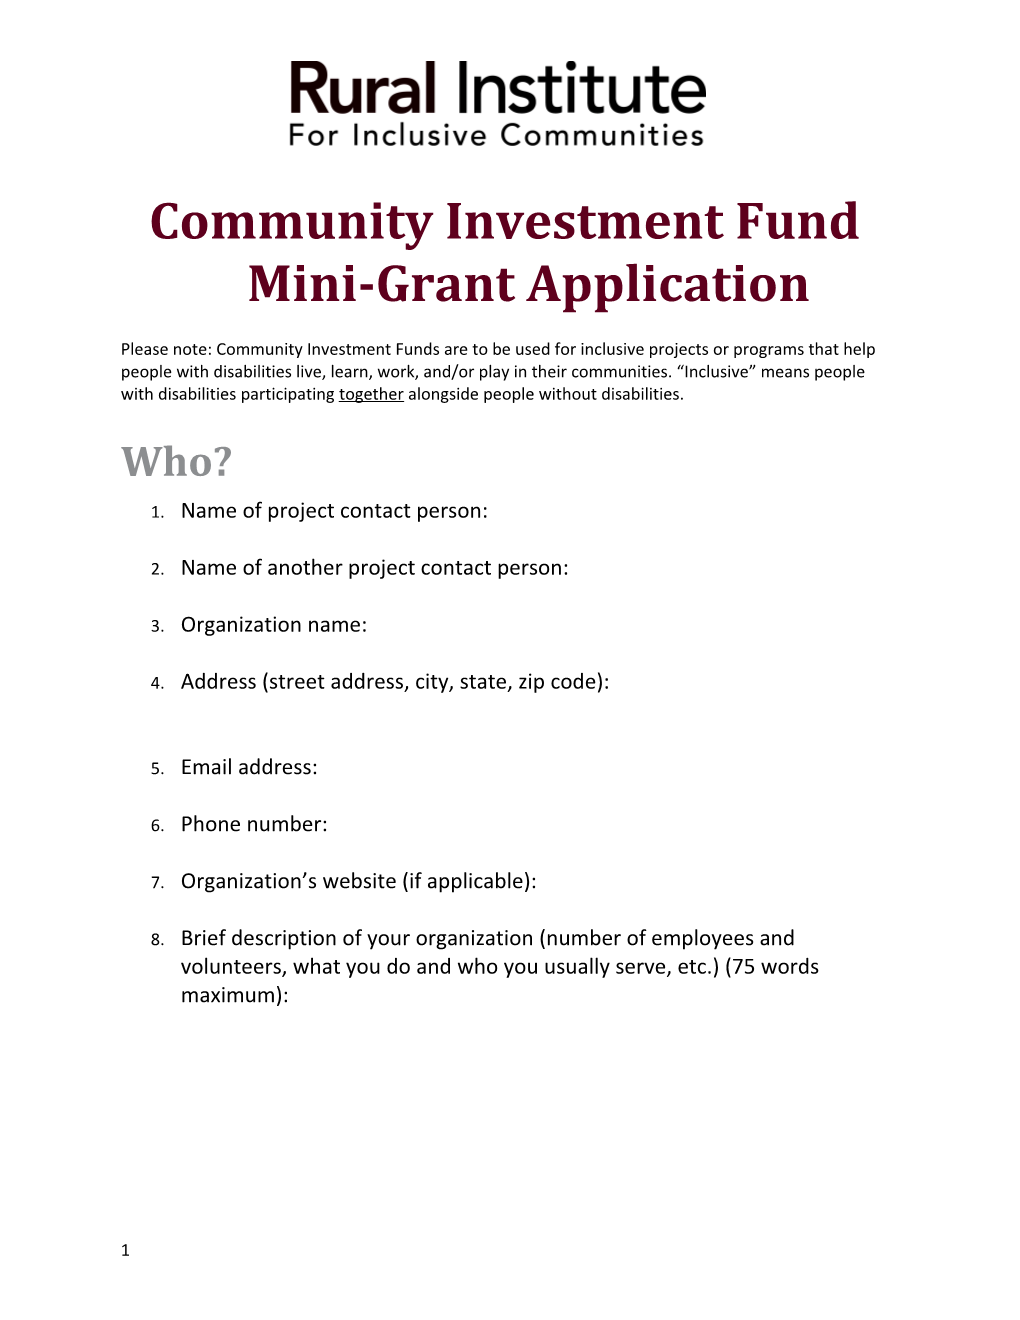 Community Investment Fund Mini-Grant Application